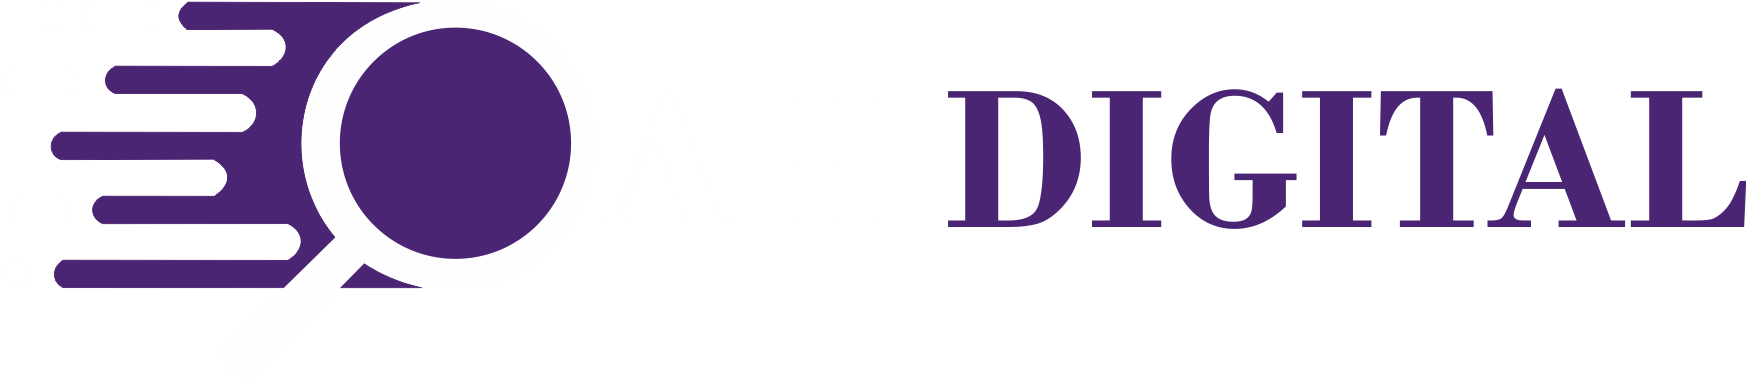 ah digital logo 2